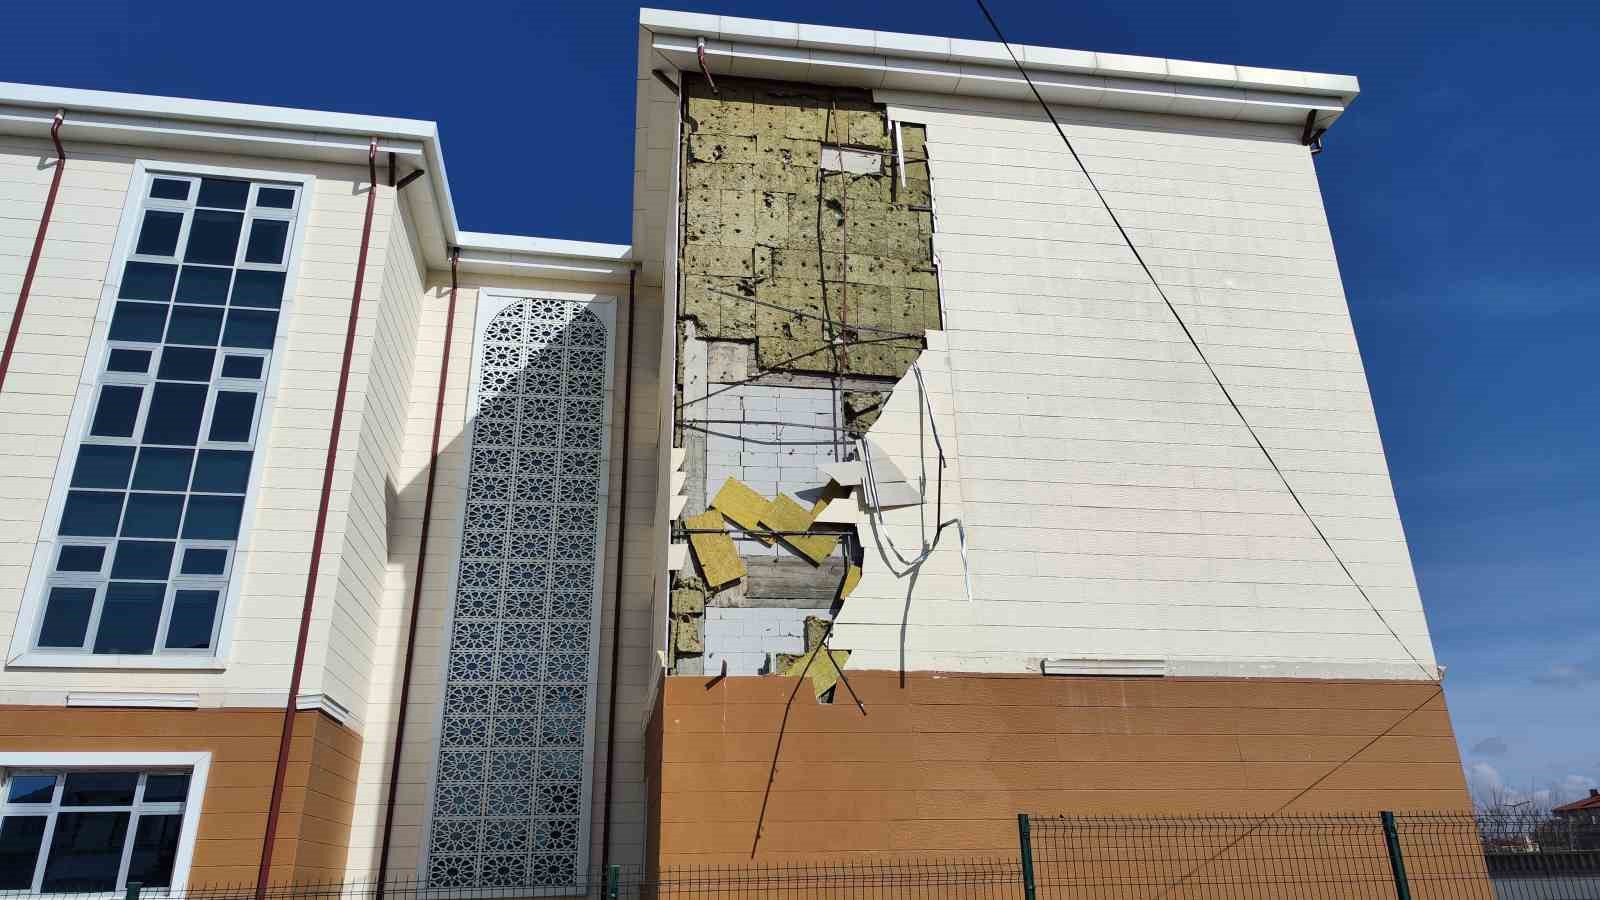 Kuvvetli rüzgar okul duvarına zarar verdi